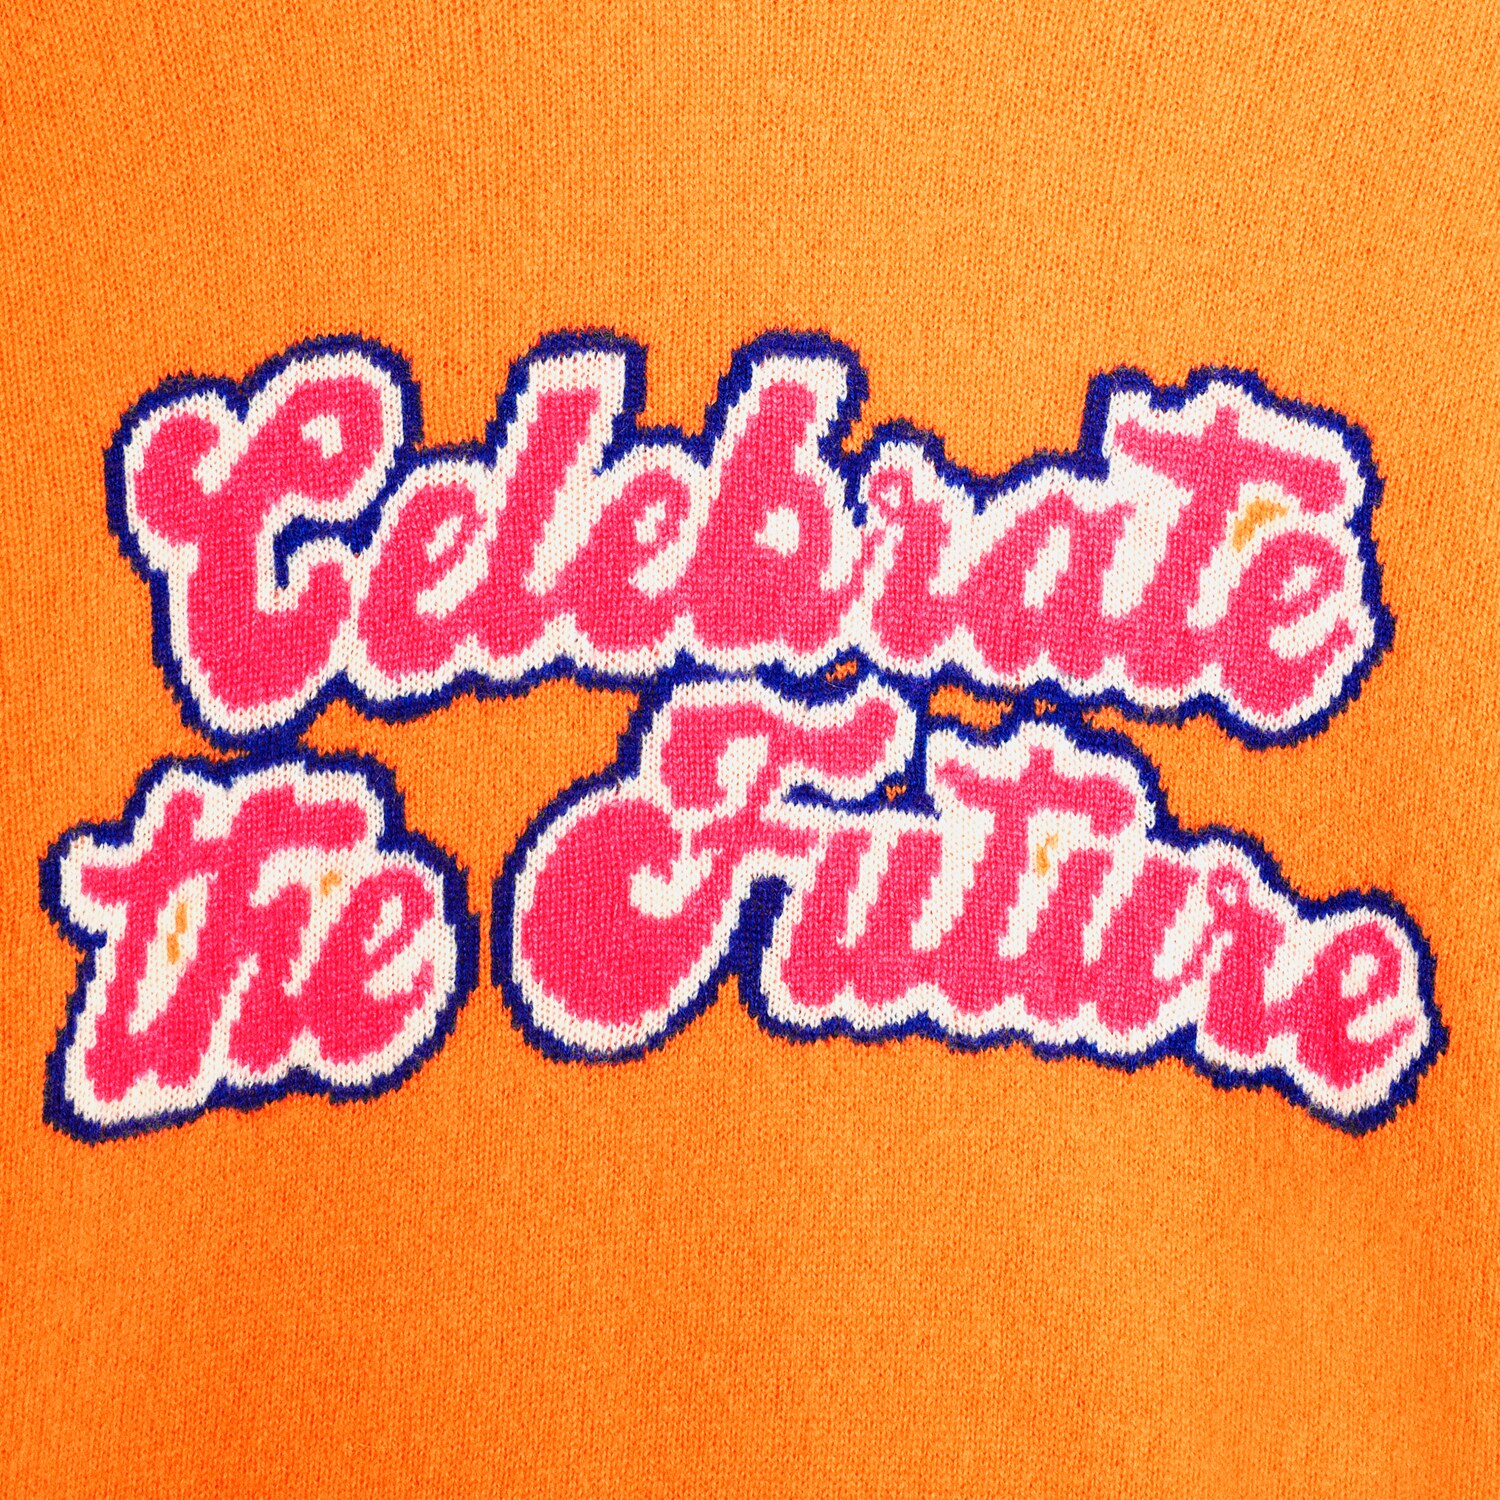 Pull "Celebrate the Future"